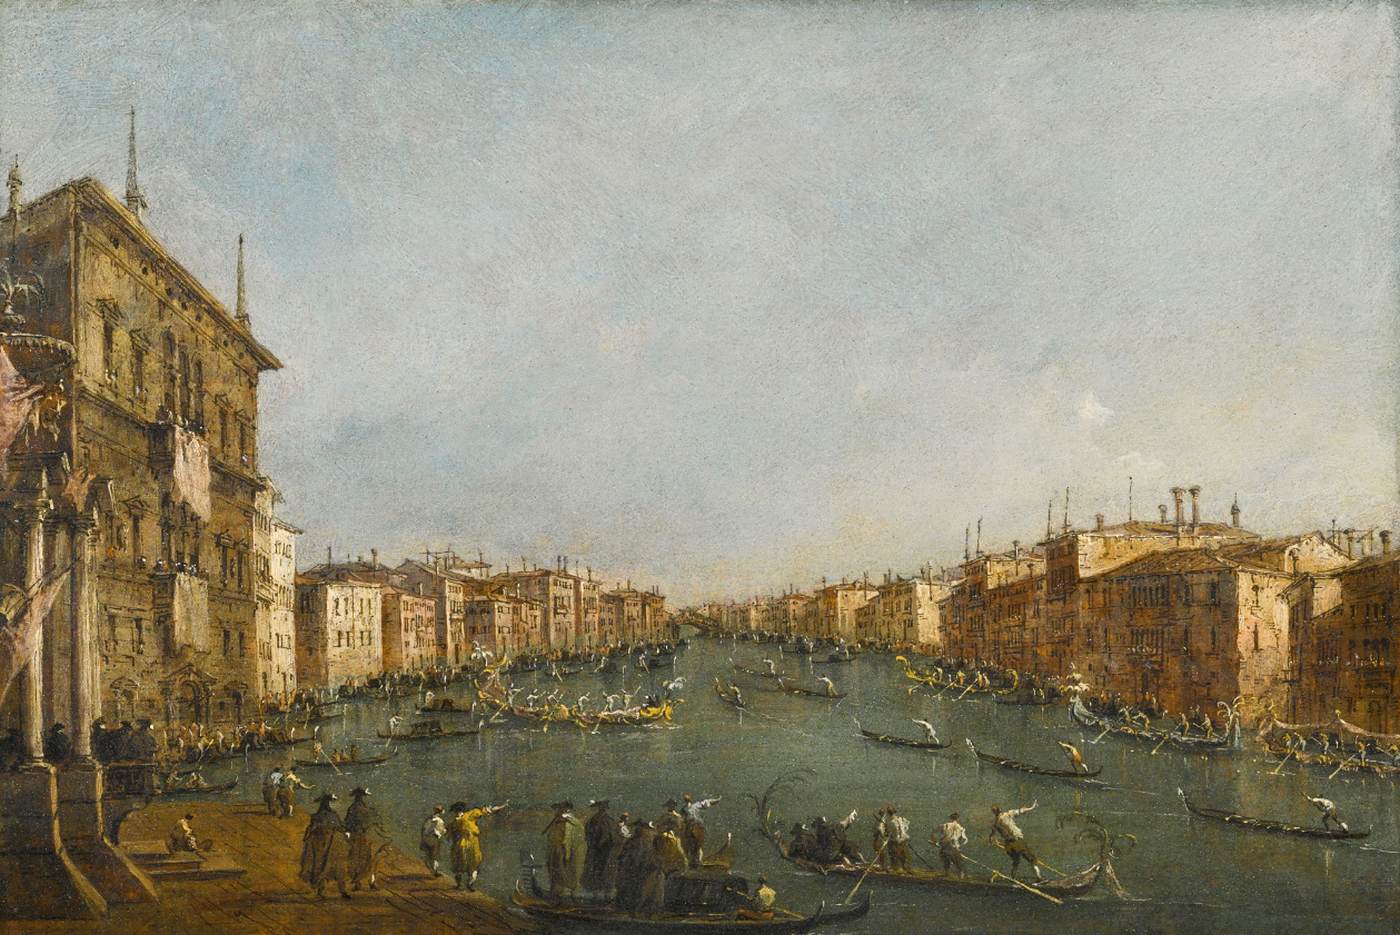 View of a Regatta in the Grand Canal